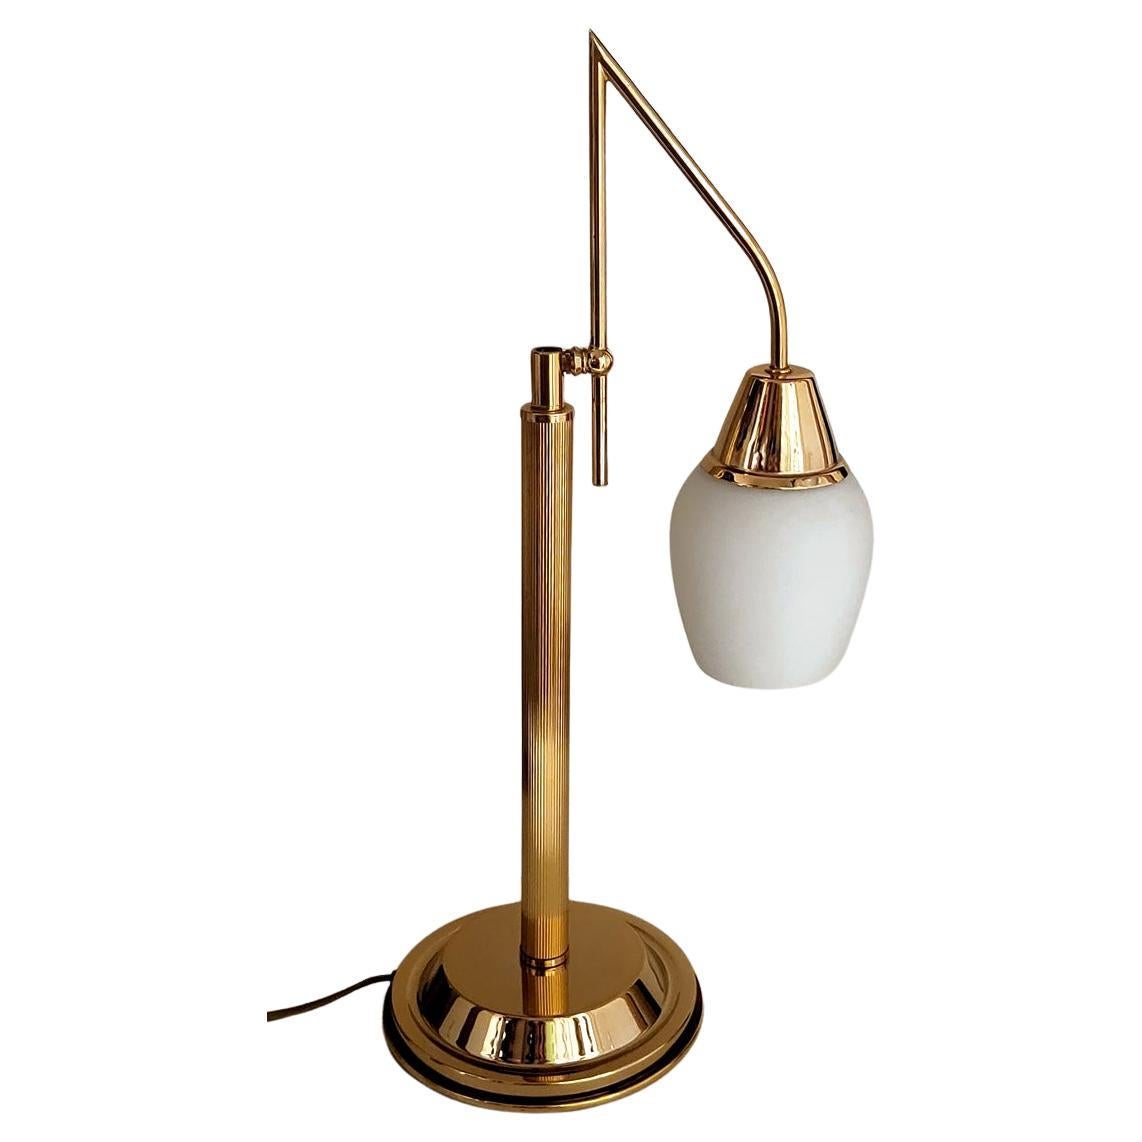 German Vintage Adjustable Brass and Glass Table Desk Lamp 1970s For Sale